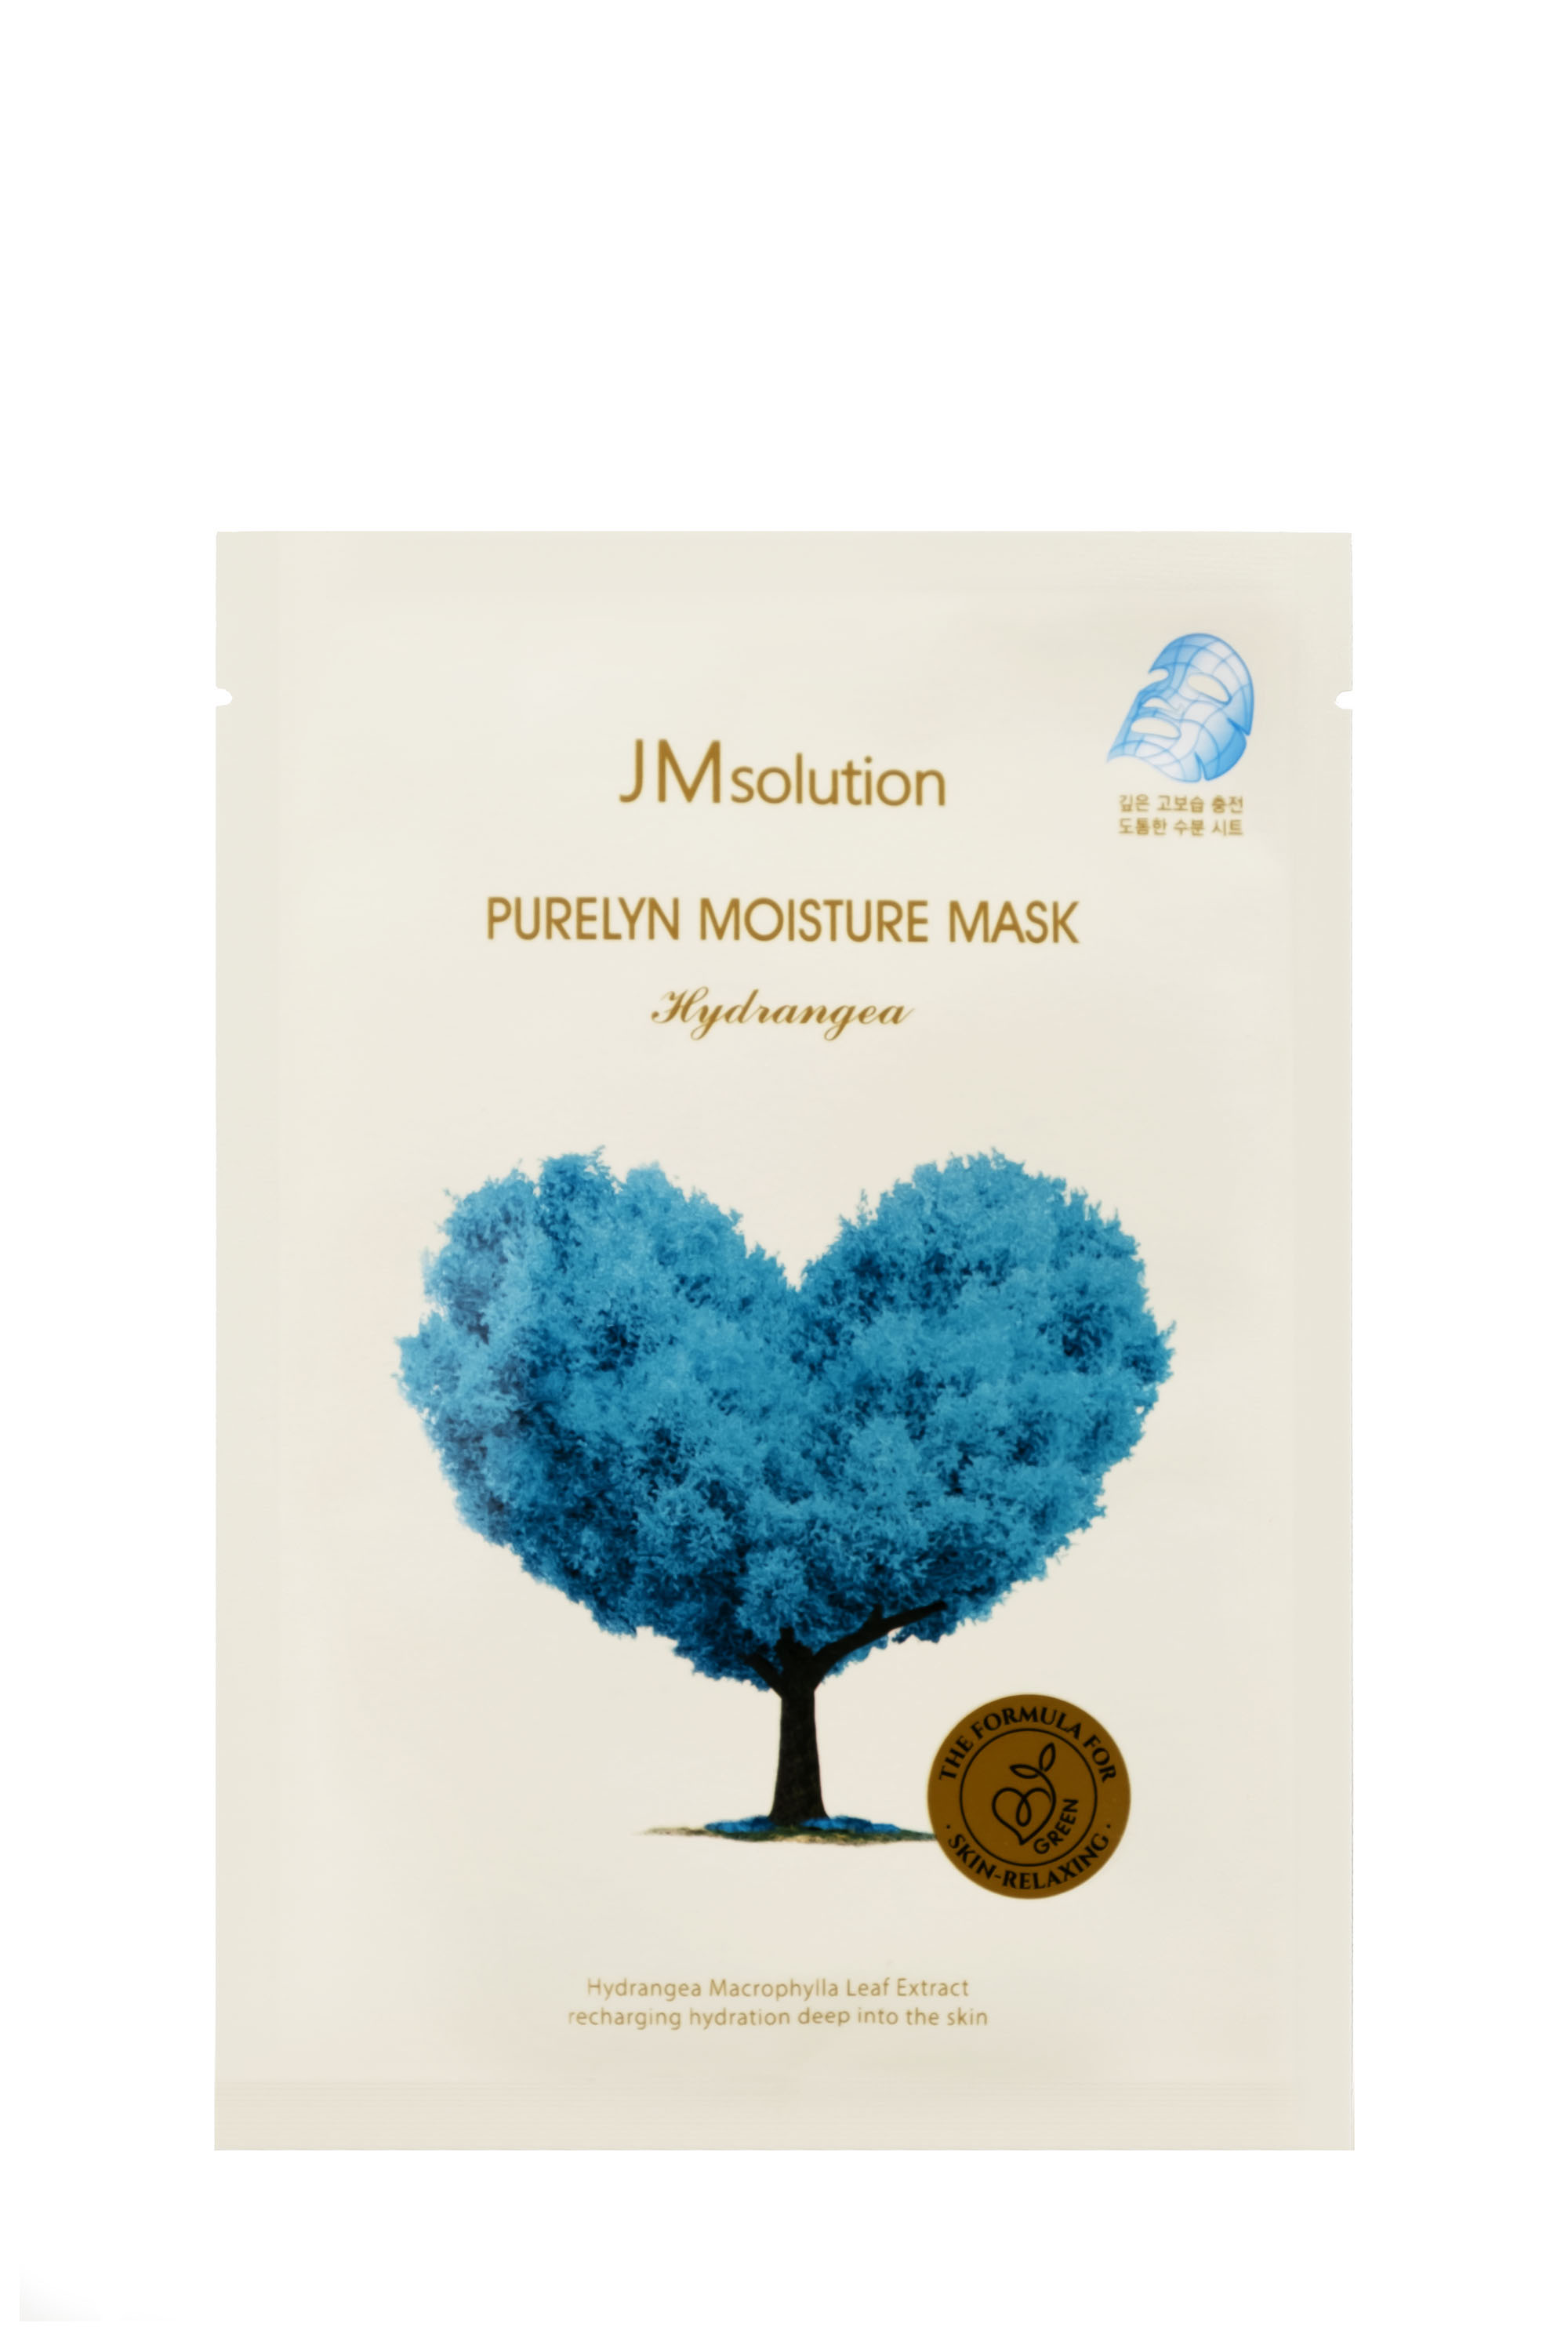  JMsolution Purelyn Moisture Mask 3..